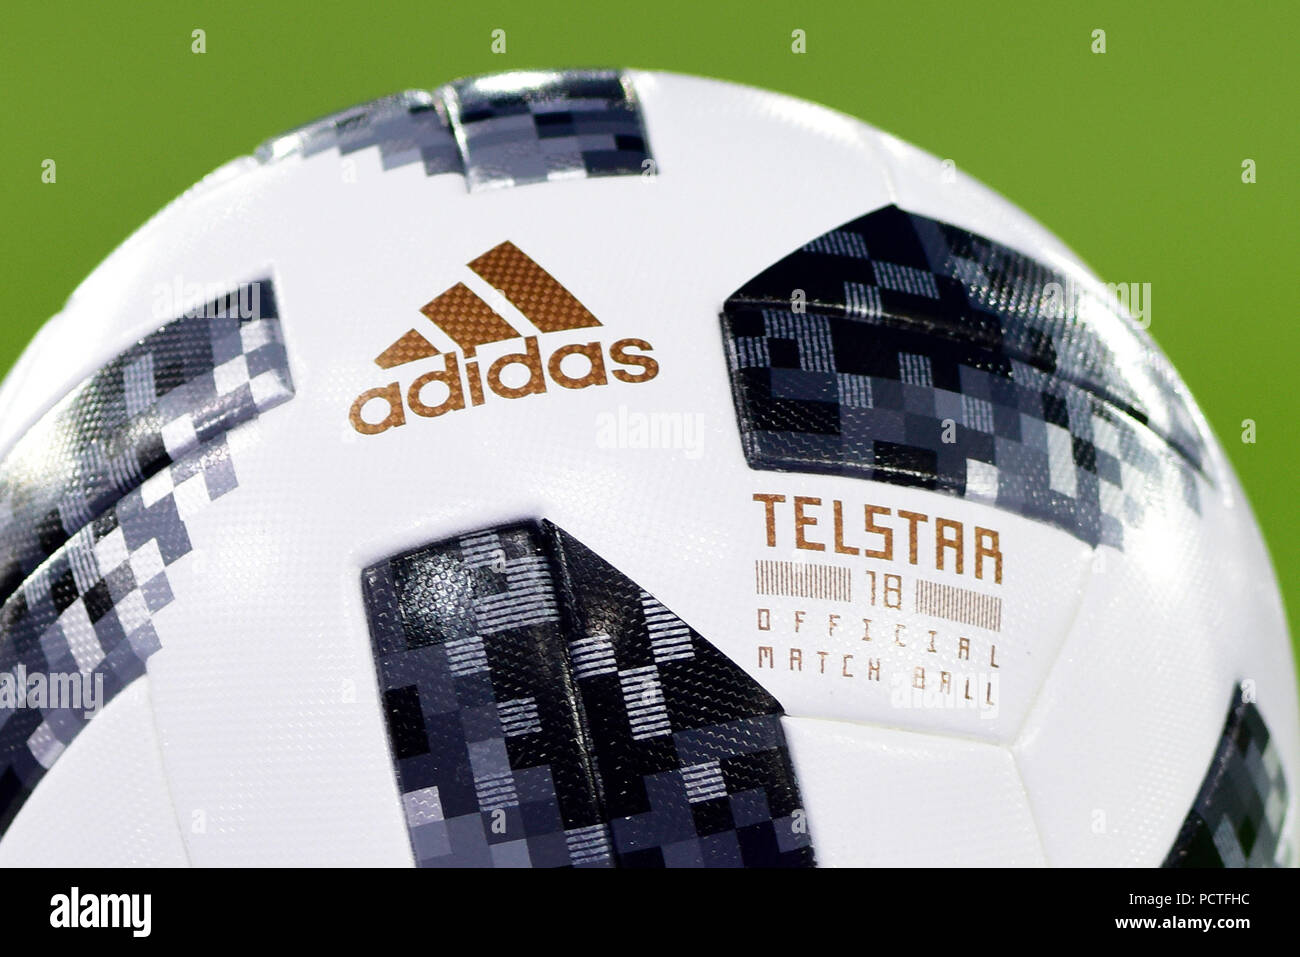 Football World Cup 2018, WM Ball Telstar 18 by adidas, Stock Photo